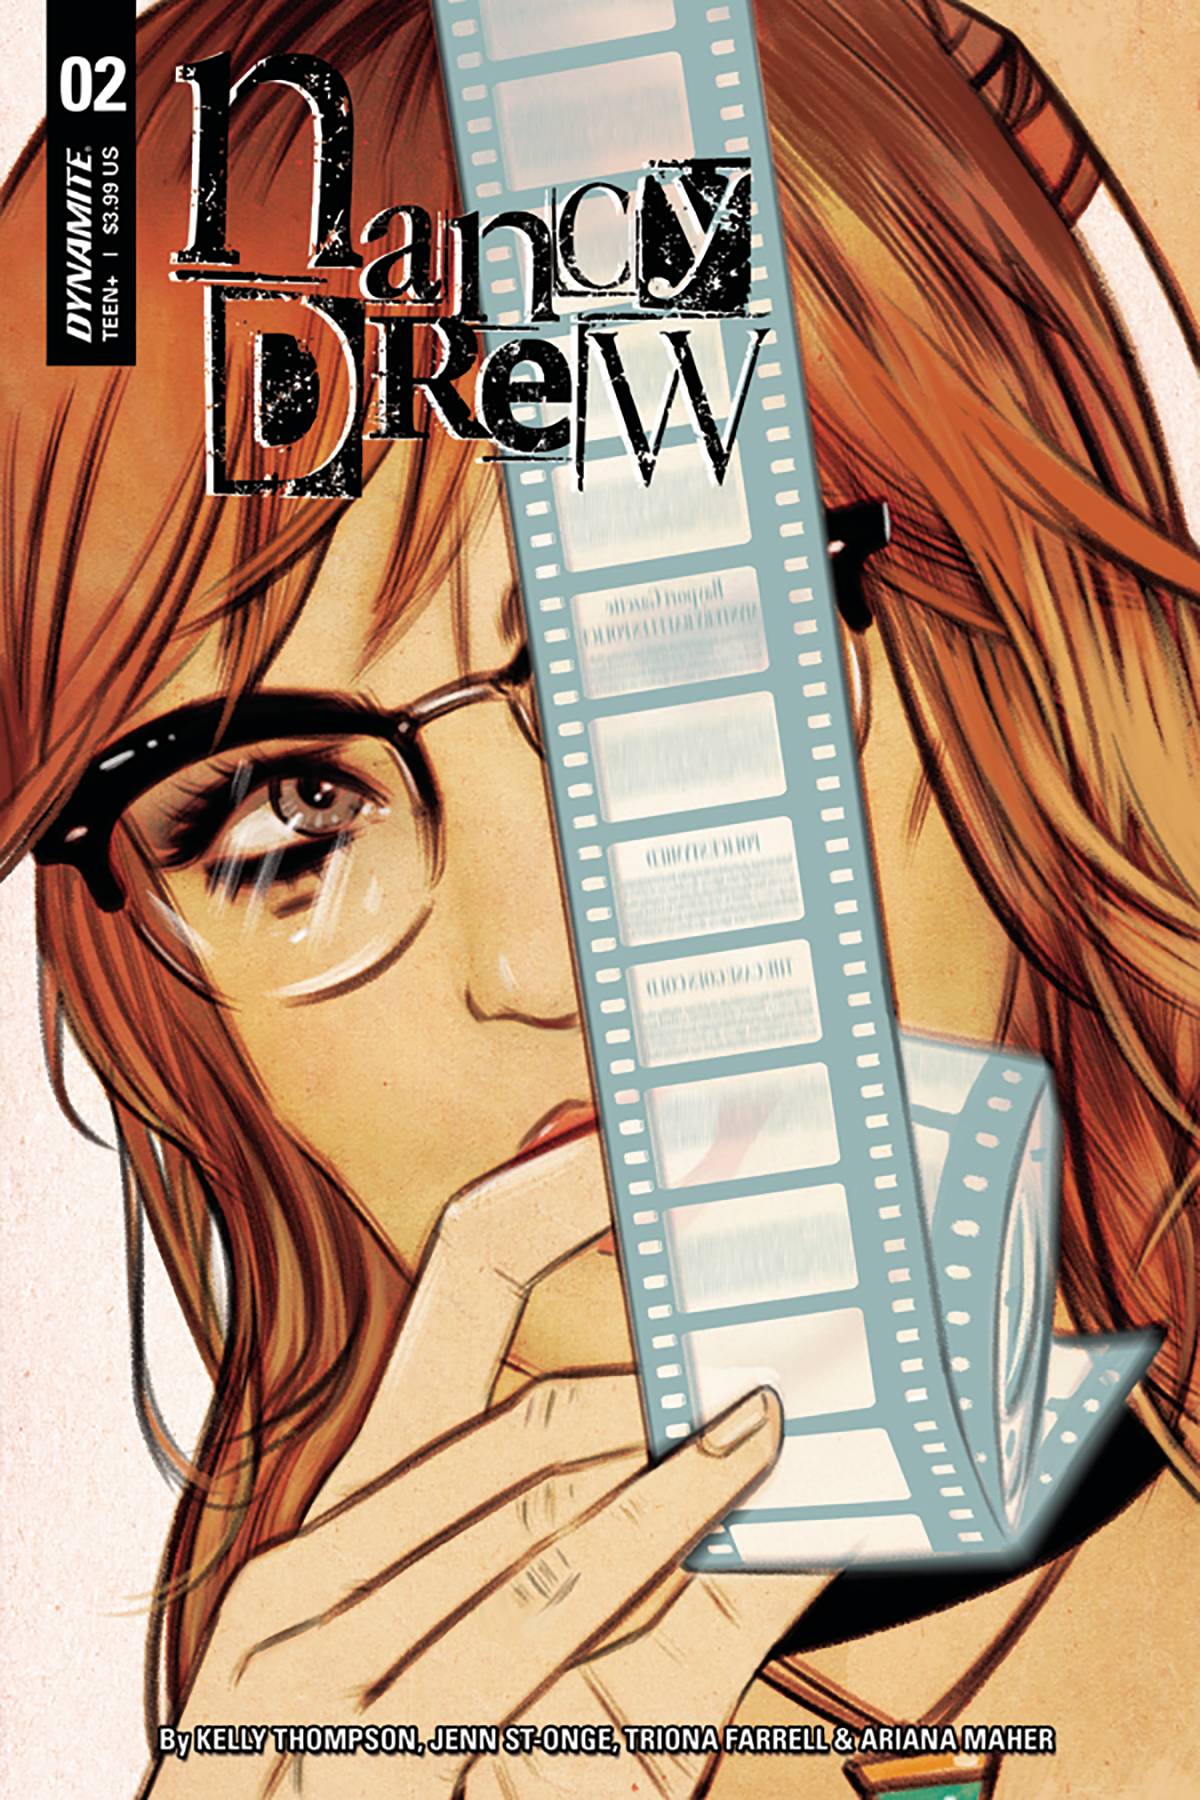 Nancy Drew #2 Cover A Lotay